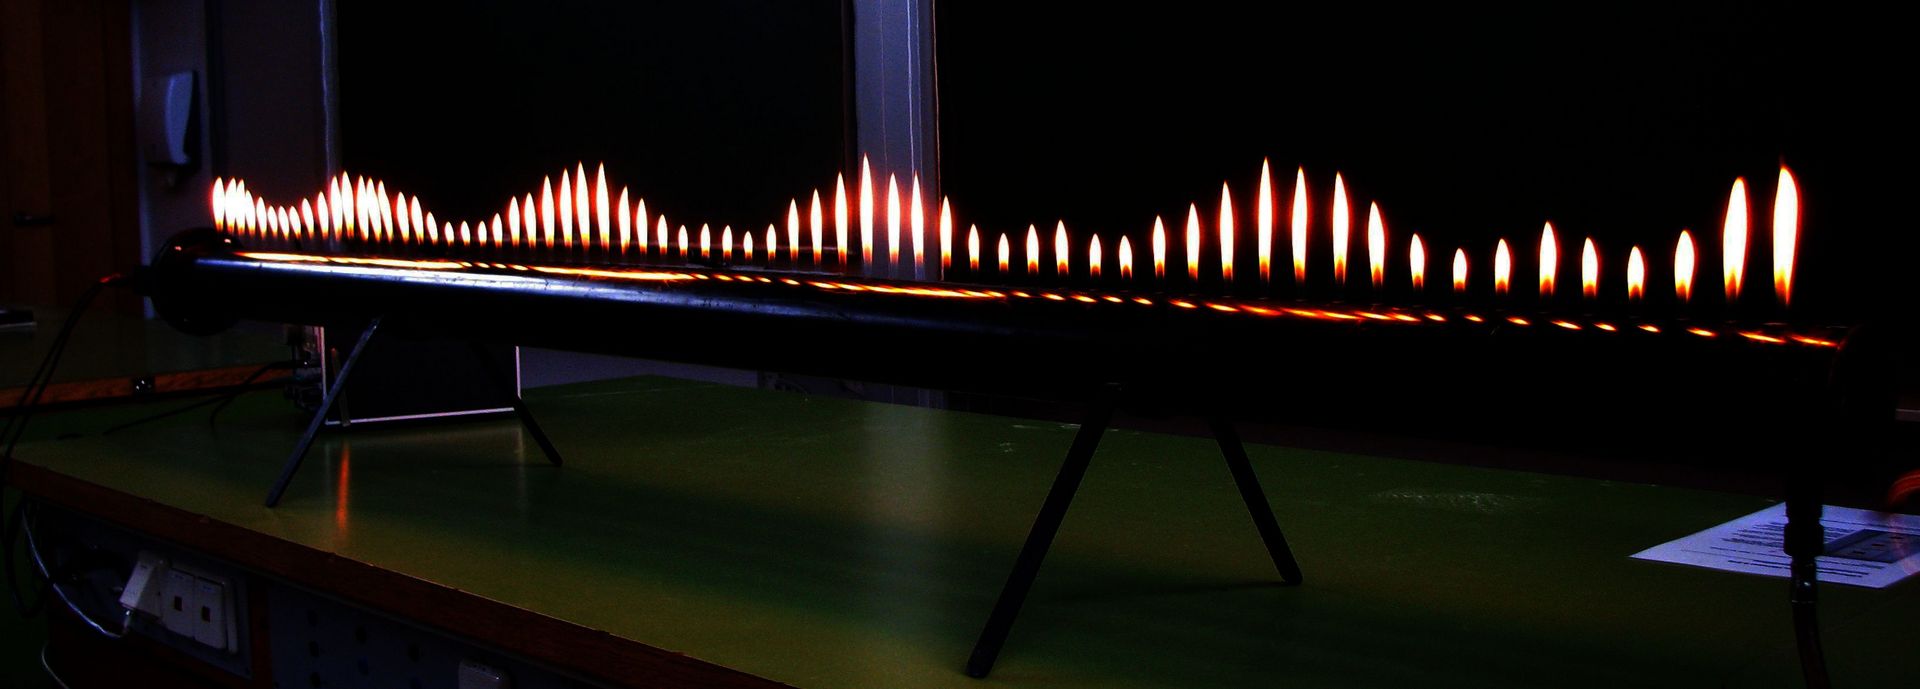 Demonstration experiment: Rubens’ Flame Tube – Standing sound waves in gas – photo Dr. Jürgen Haiber 